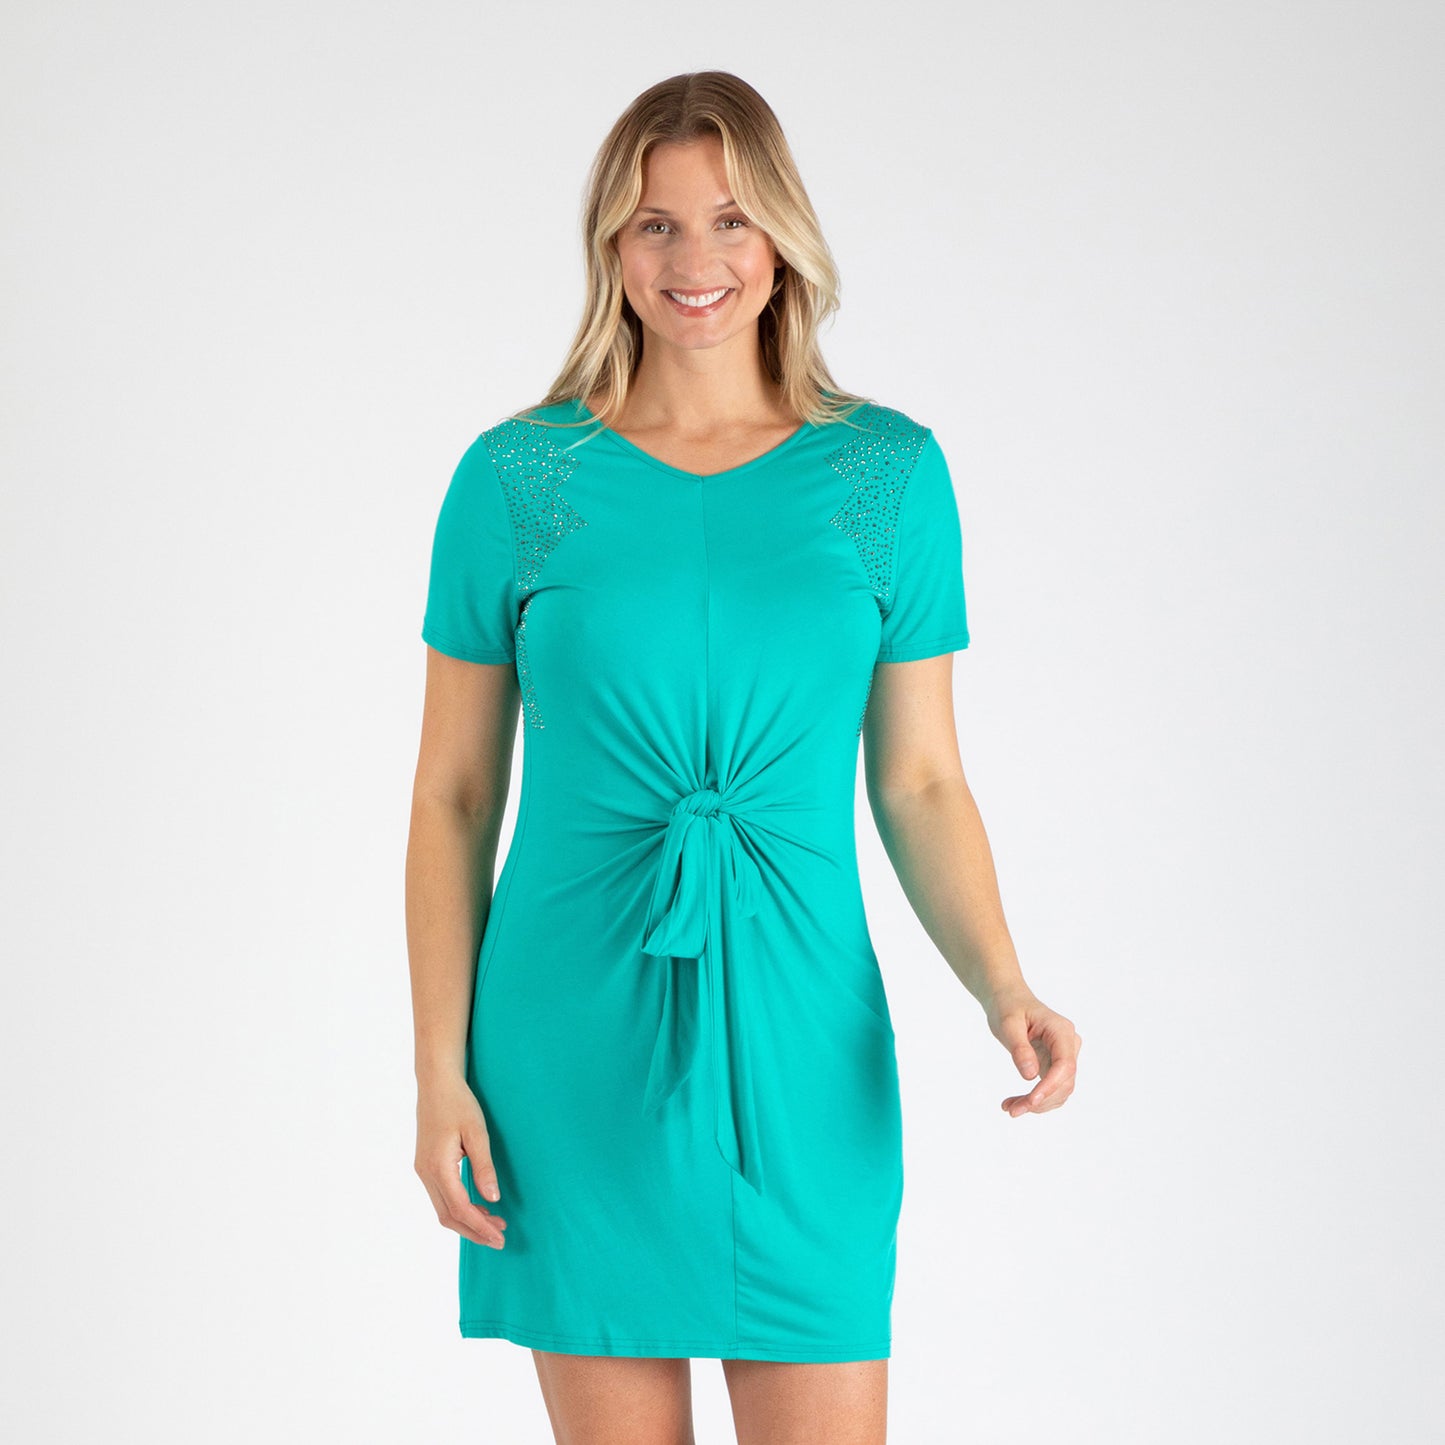 Twist Tie-Front Short Sleeve Dress with Rhinestones